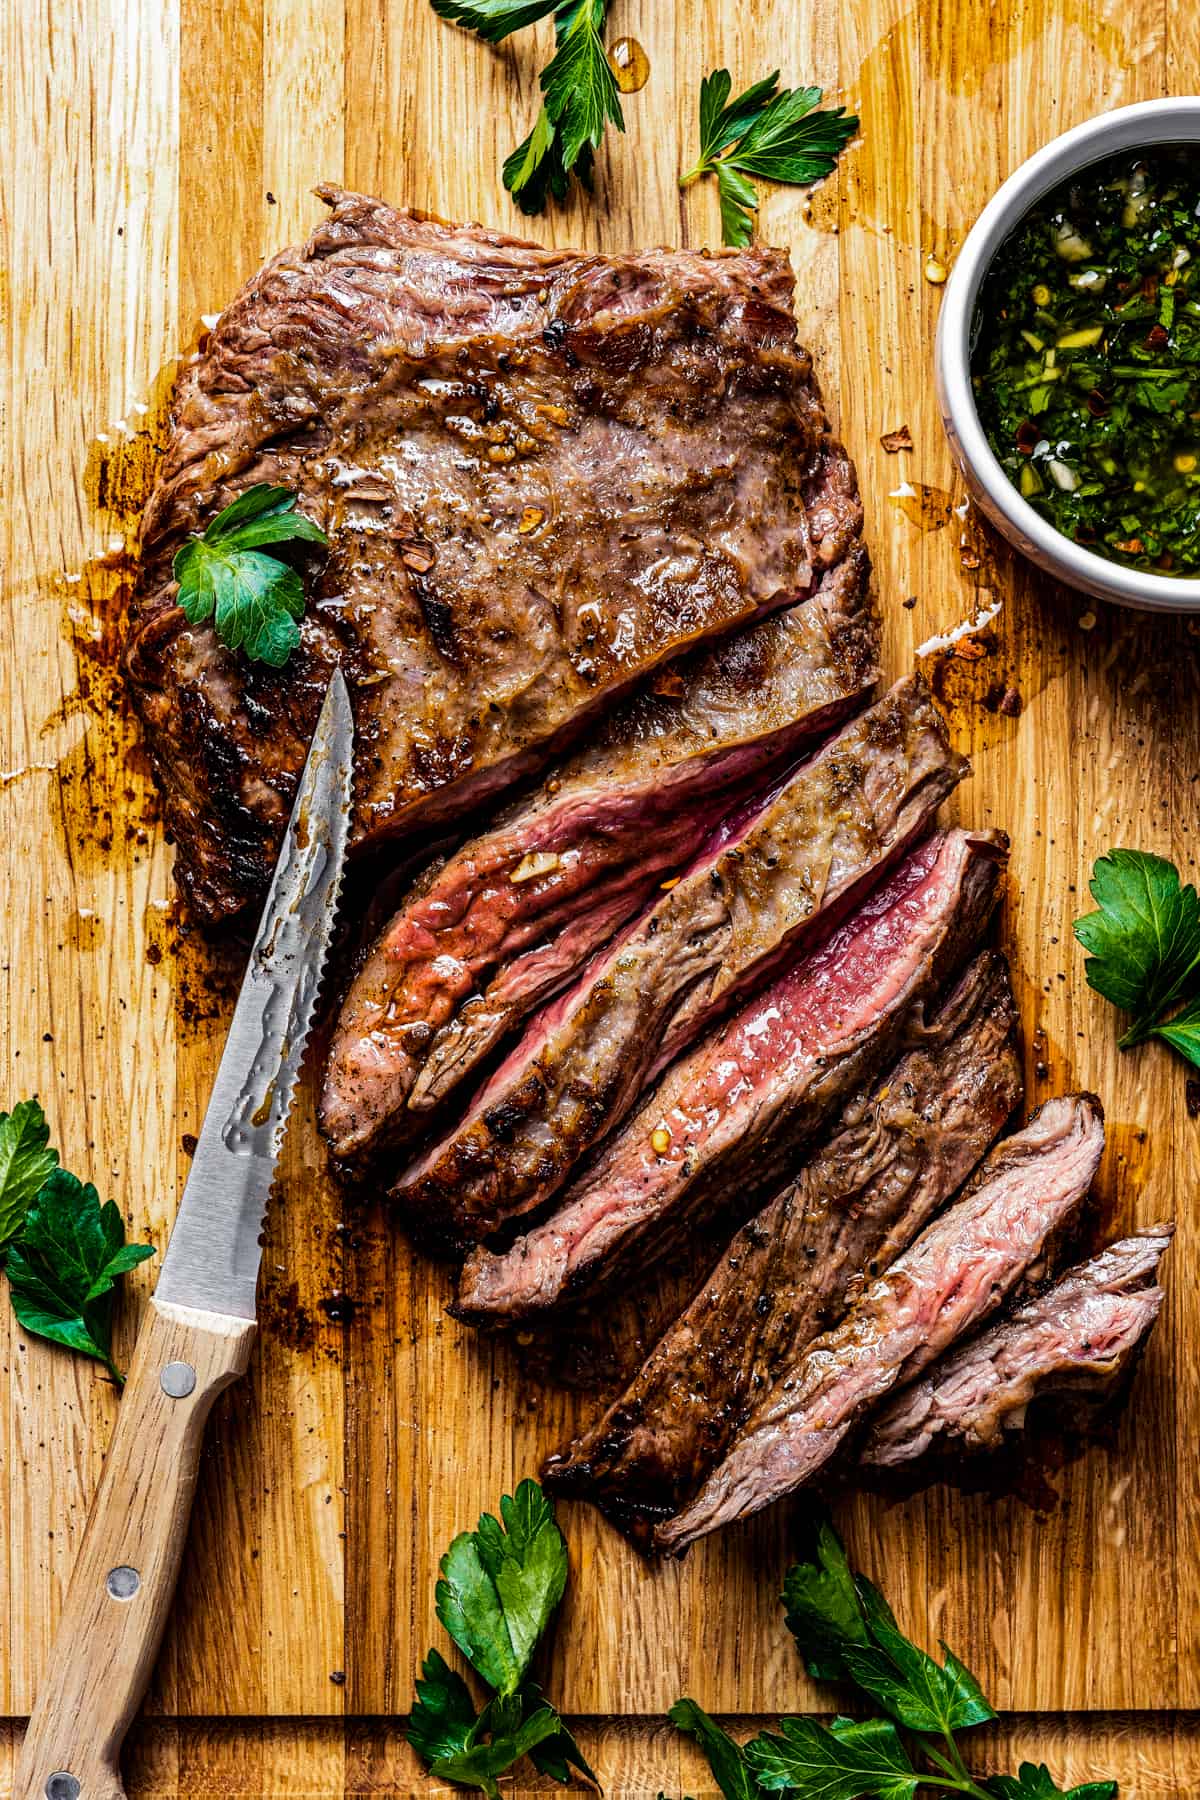 Churrasco steak on a cutting board with a knife and a bowl of chimichurri.